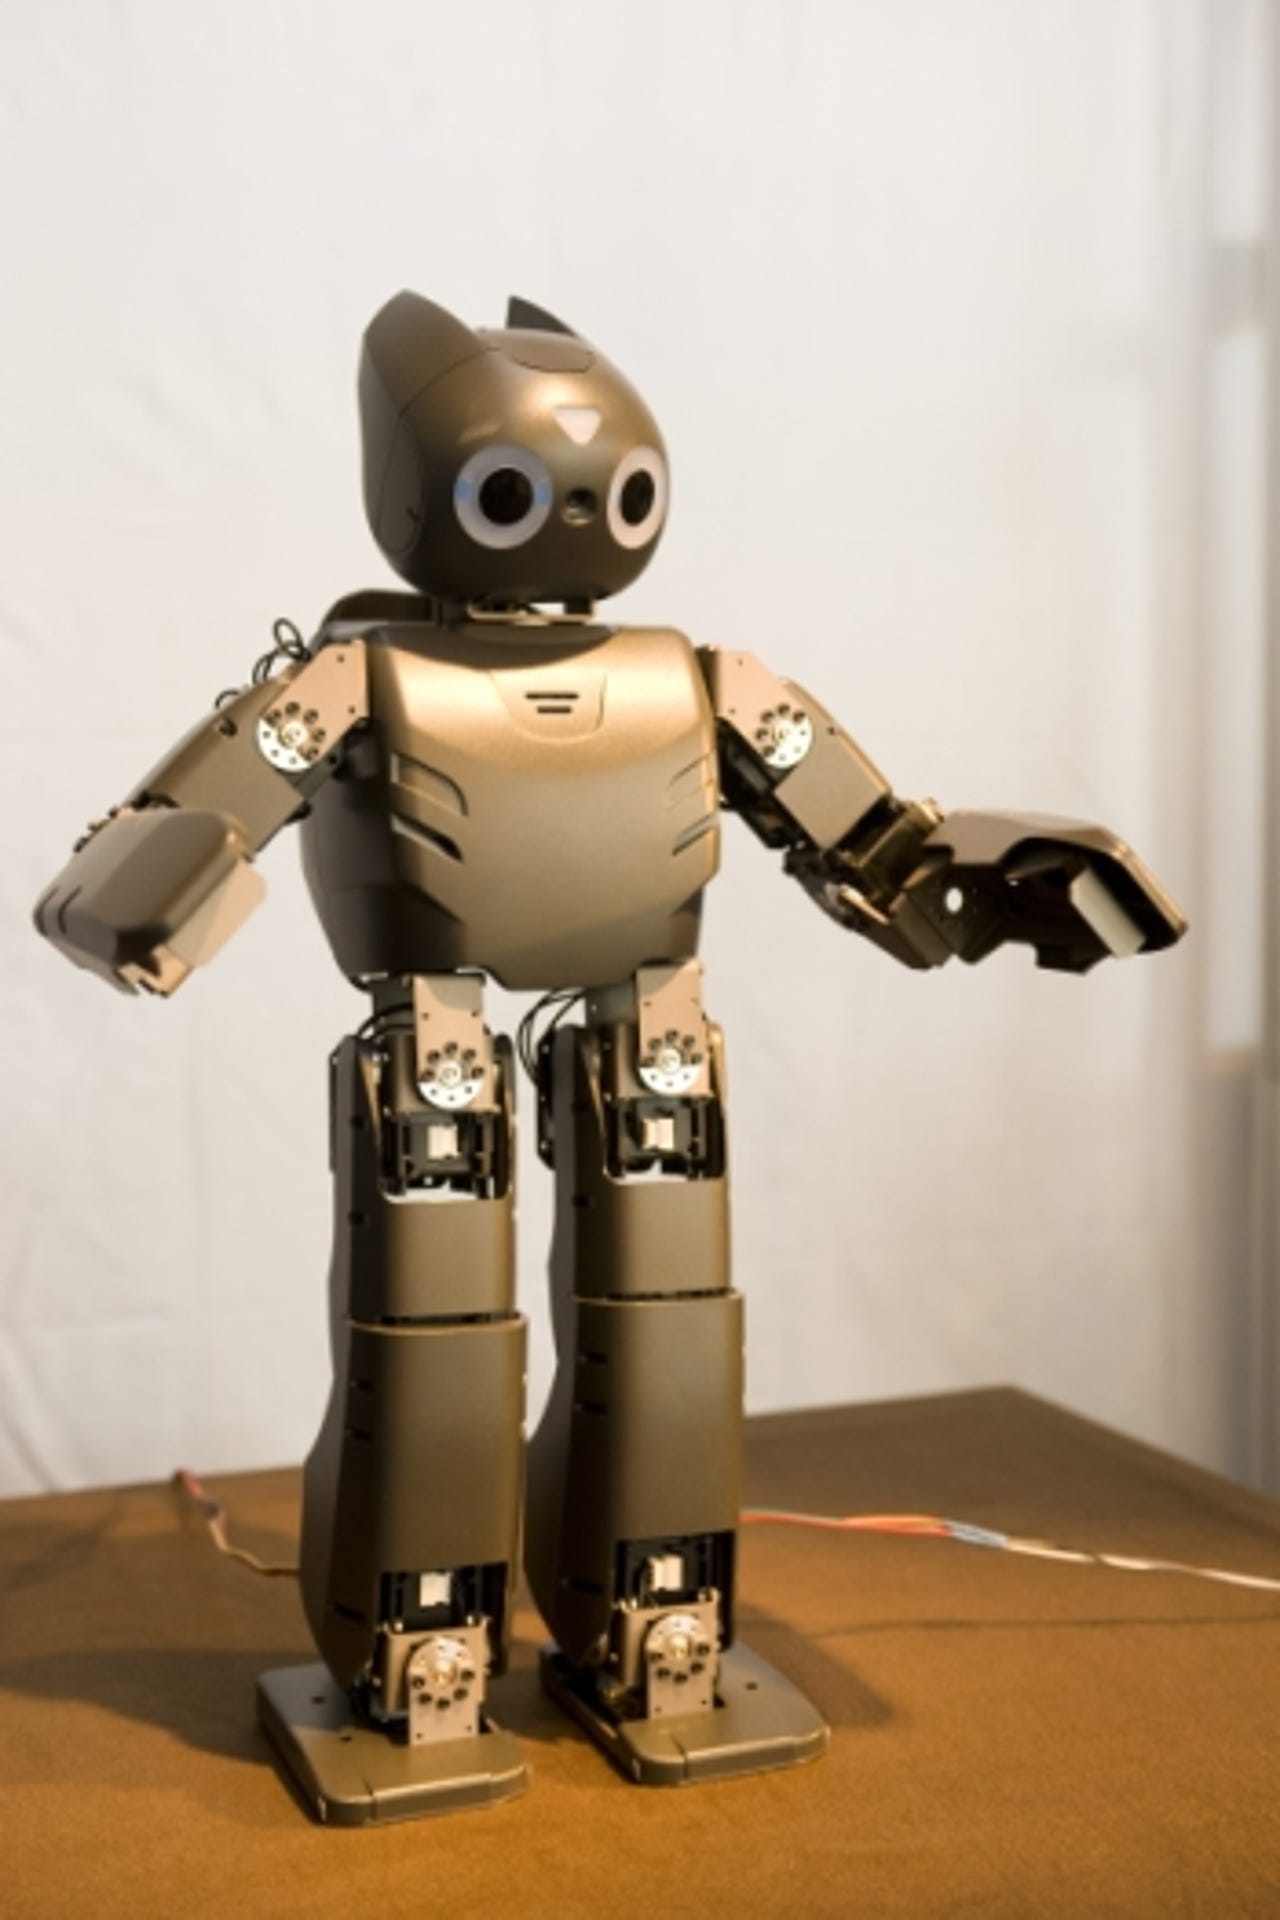 40154319-8-humanoid-robot-innorobo-350-525.jpg